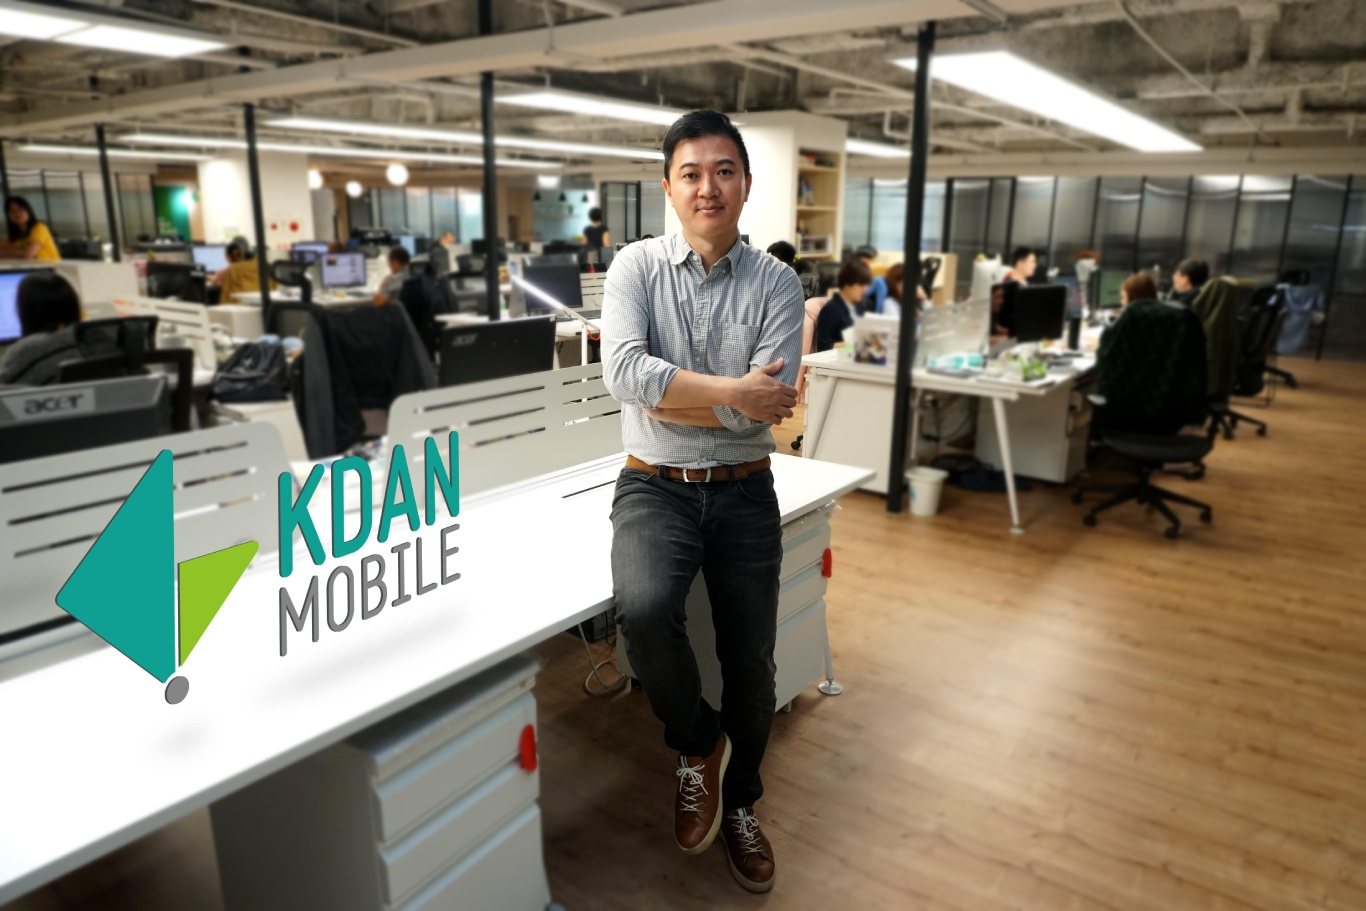 Kdan Mobile office